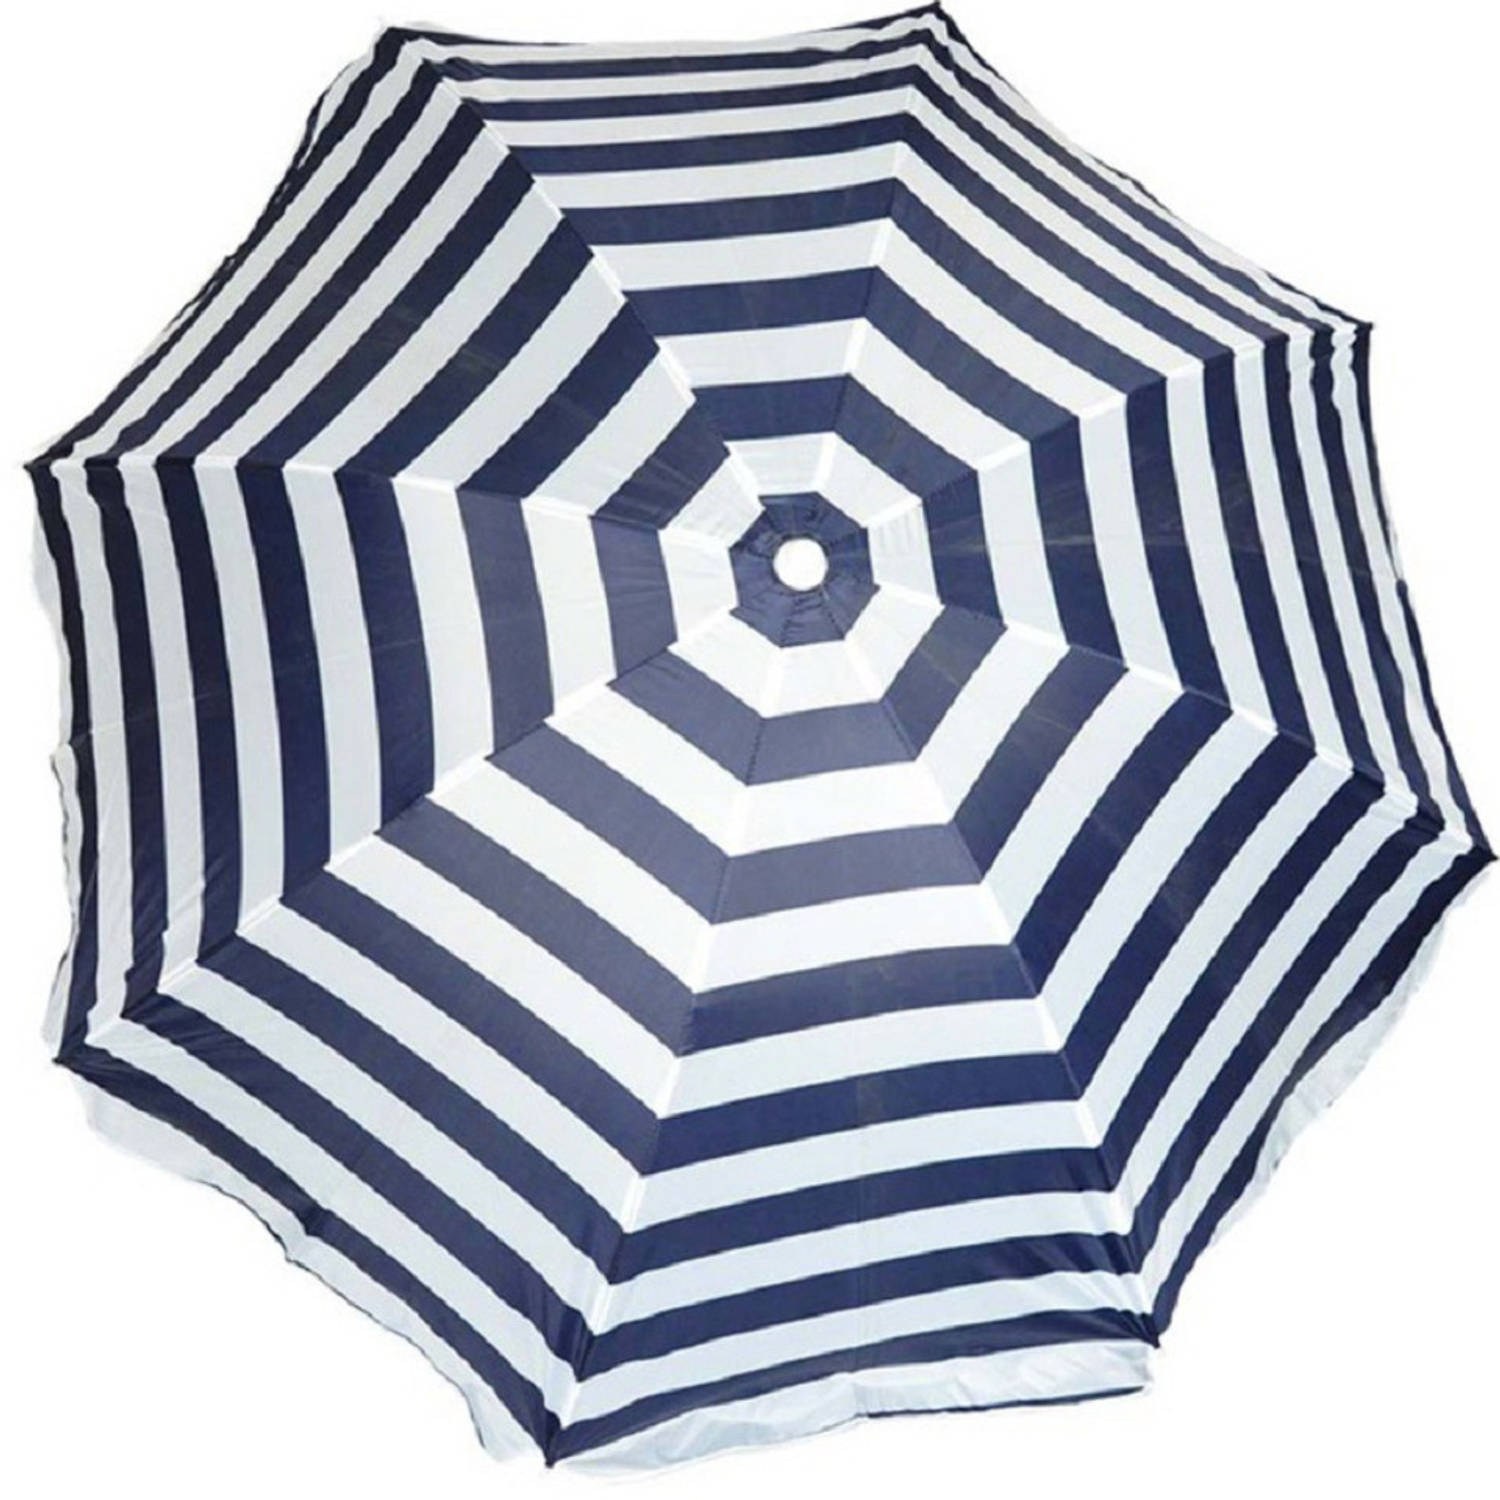 Parasol - blauw/wit - gestreept - D120 cm - UV-bescherming - incl. draagtas